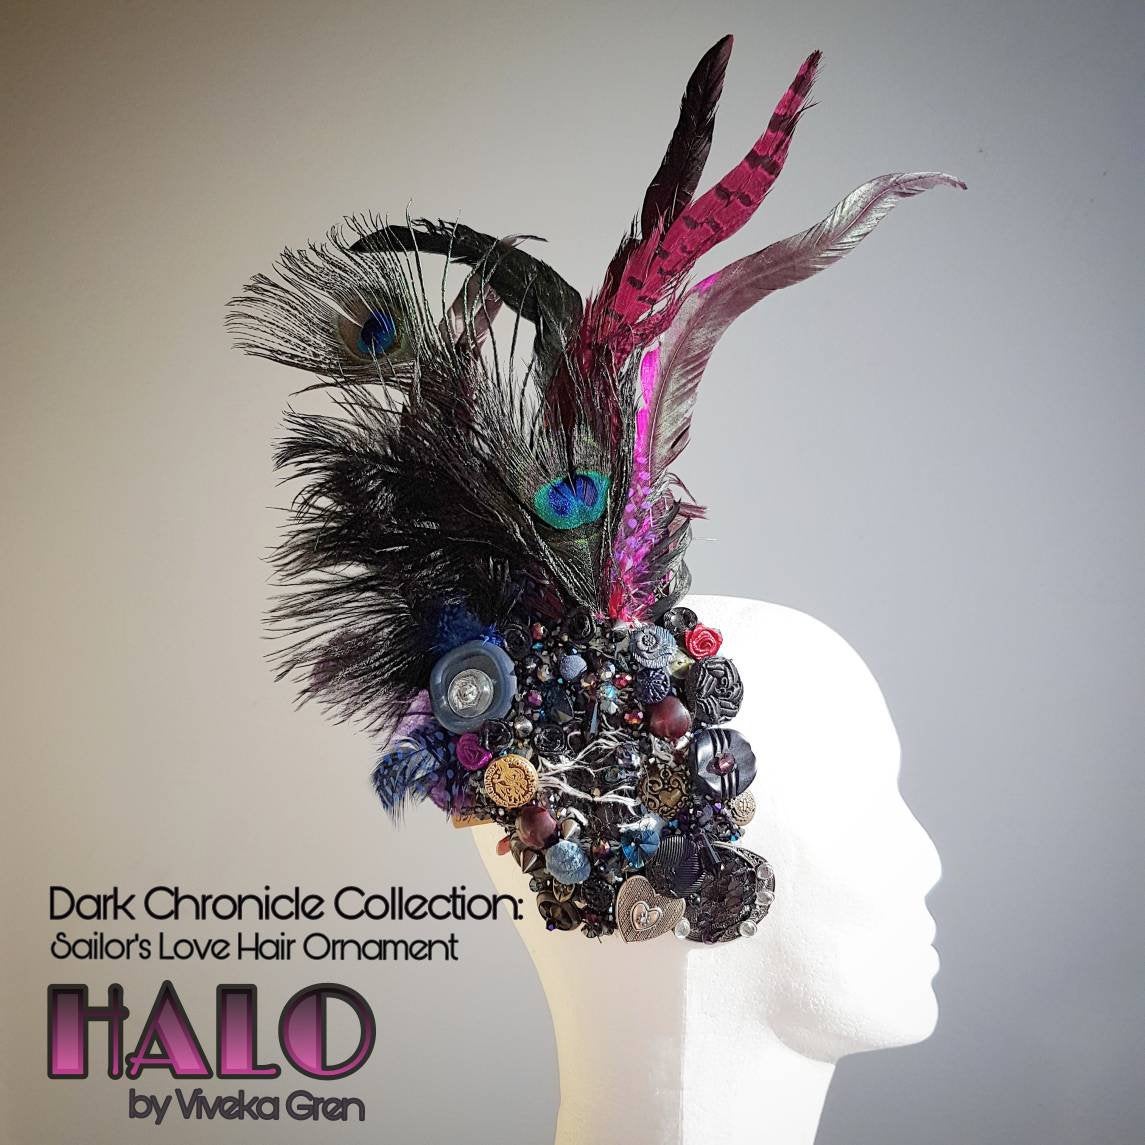 Dark Chronicle Collection: Sailor's Love hair ornament